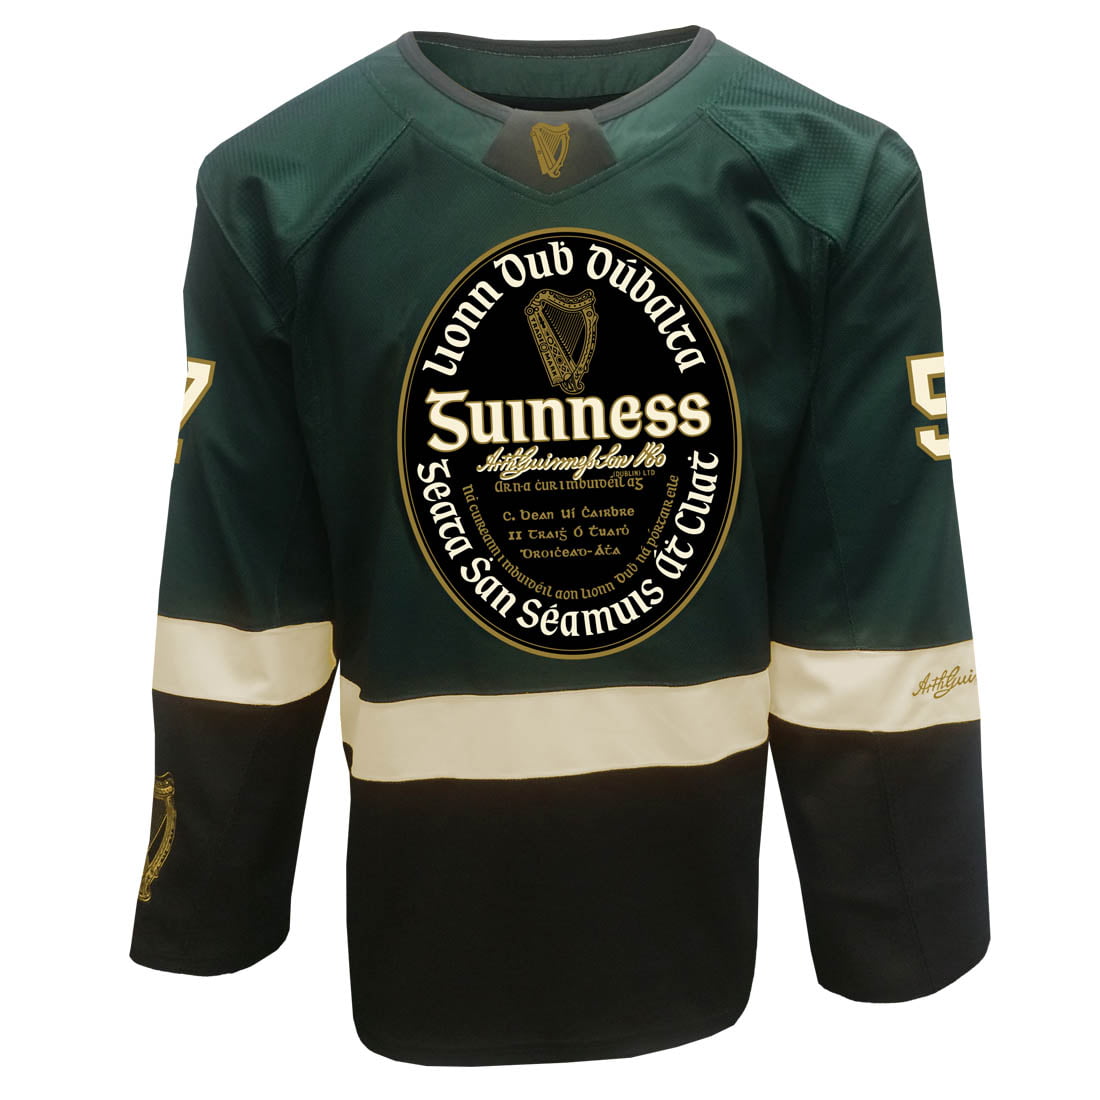 black and green hockey jersey